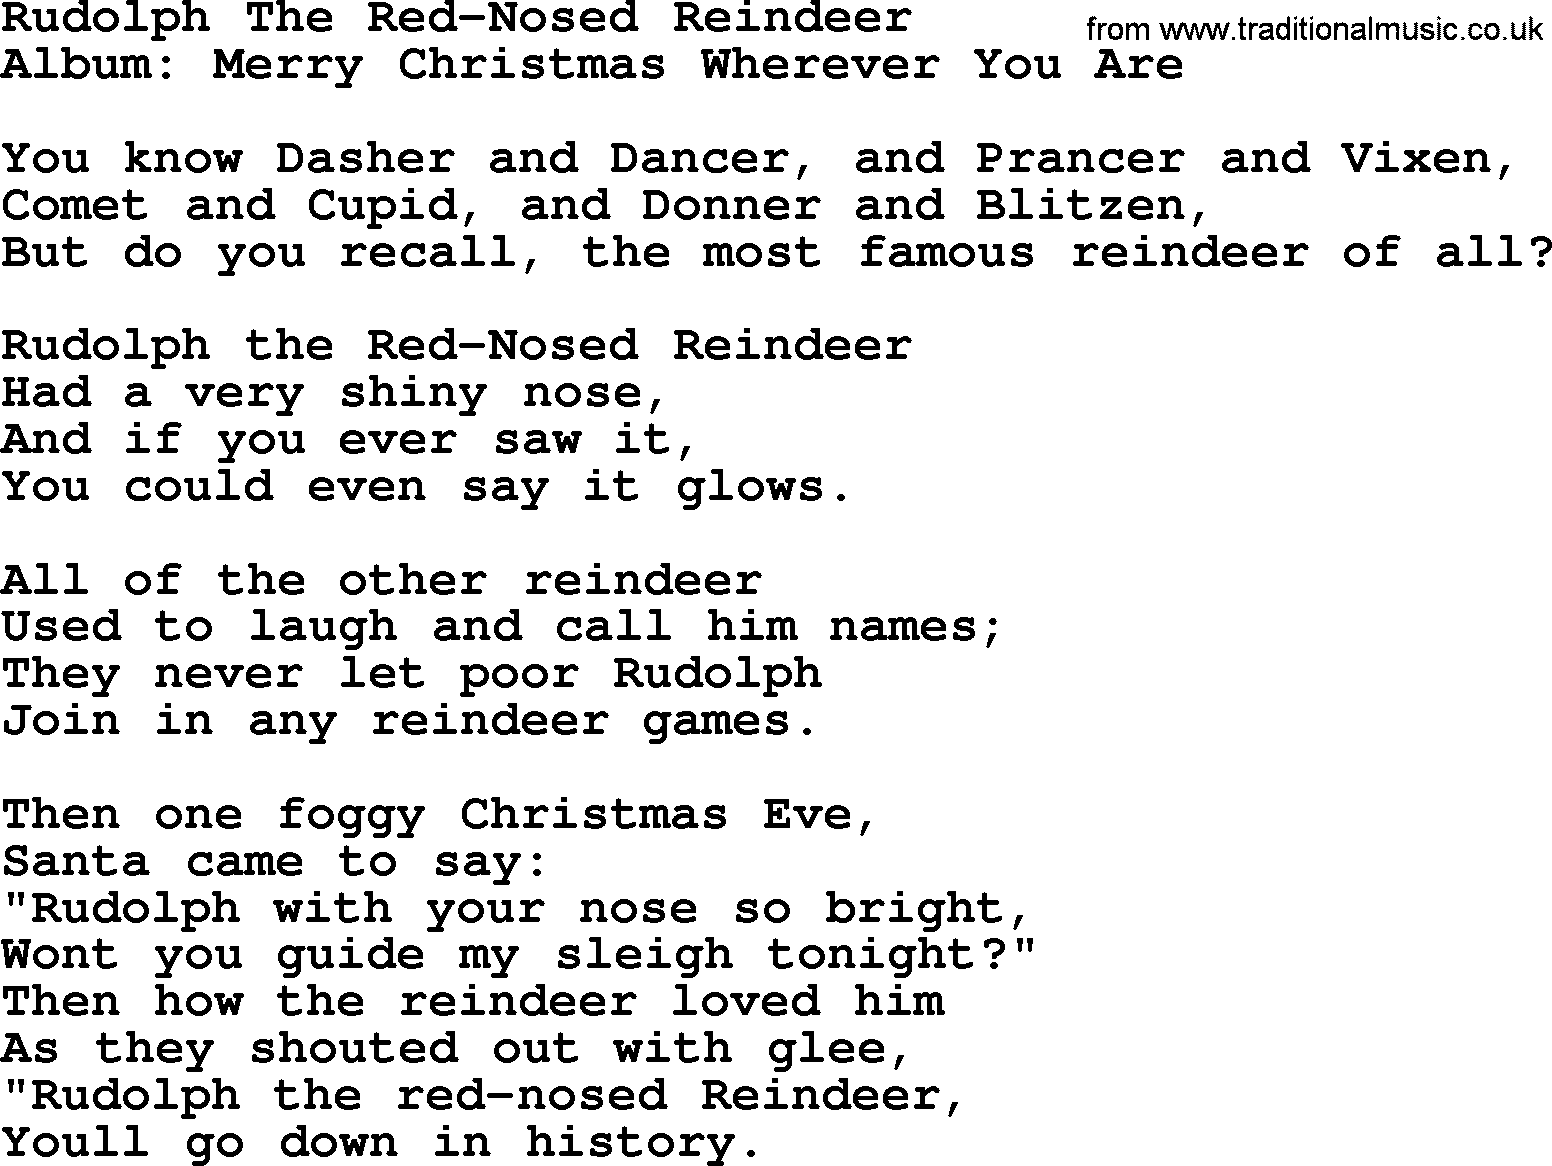 Rudolph The RedNosed Reindeer, by Strait lyrics